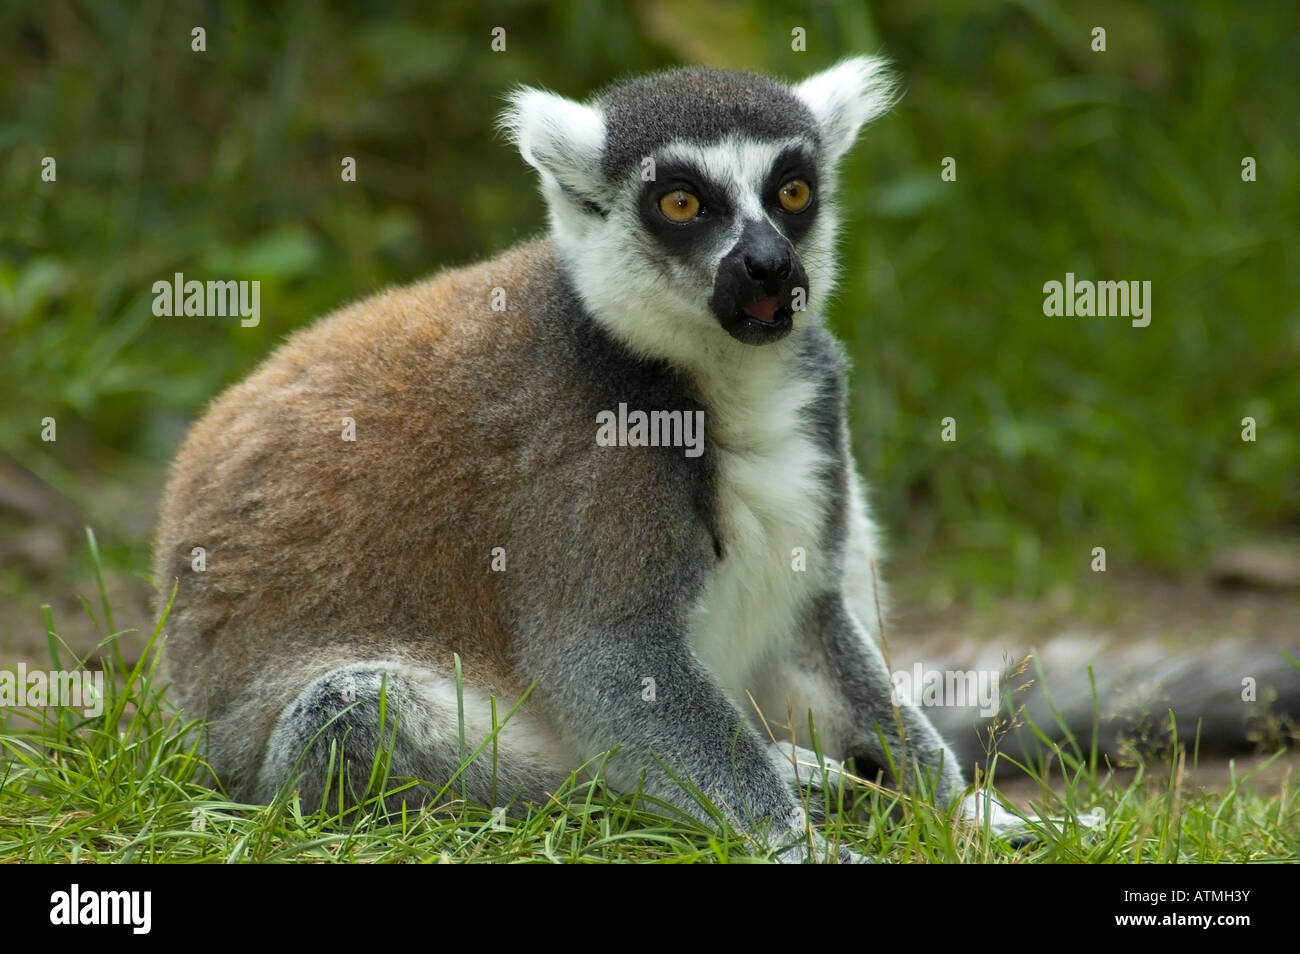 Lemur catta looking shocked as if he has seen something terrible Stock Photo